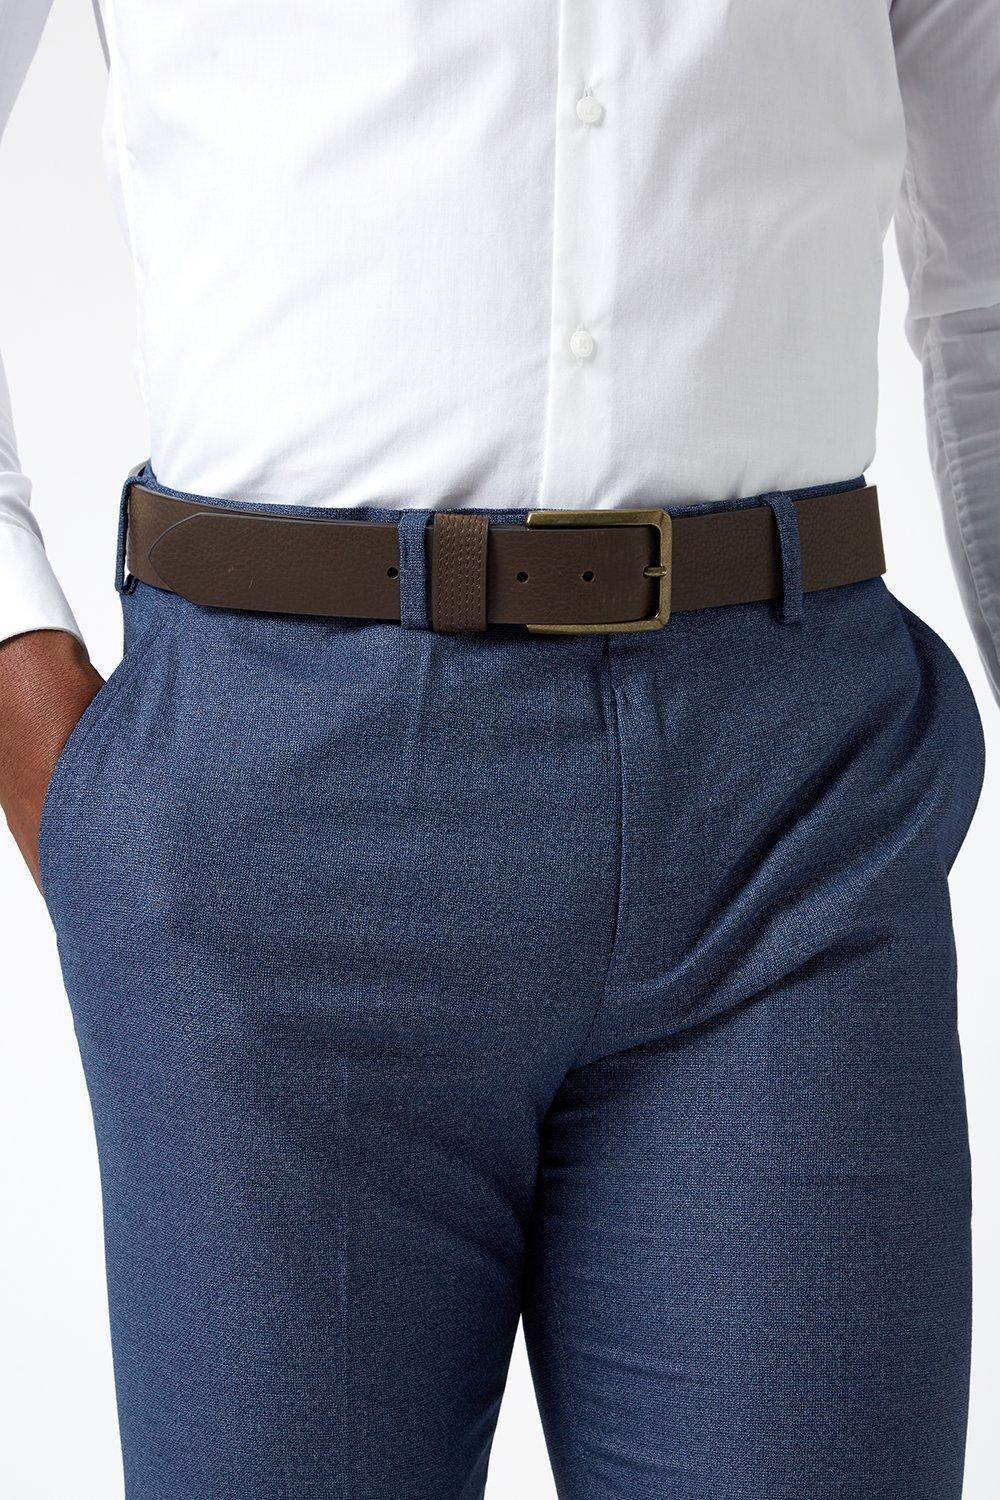 Belts | Brown Pebble Leather Ben Sherman Belt | Burton